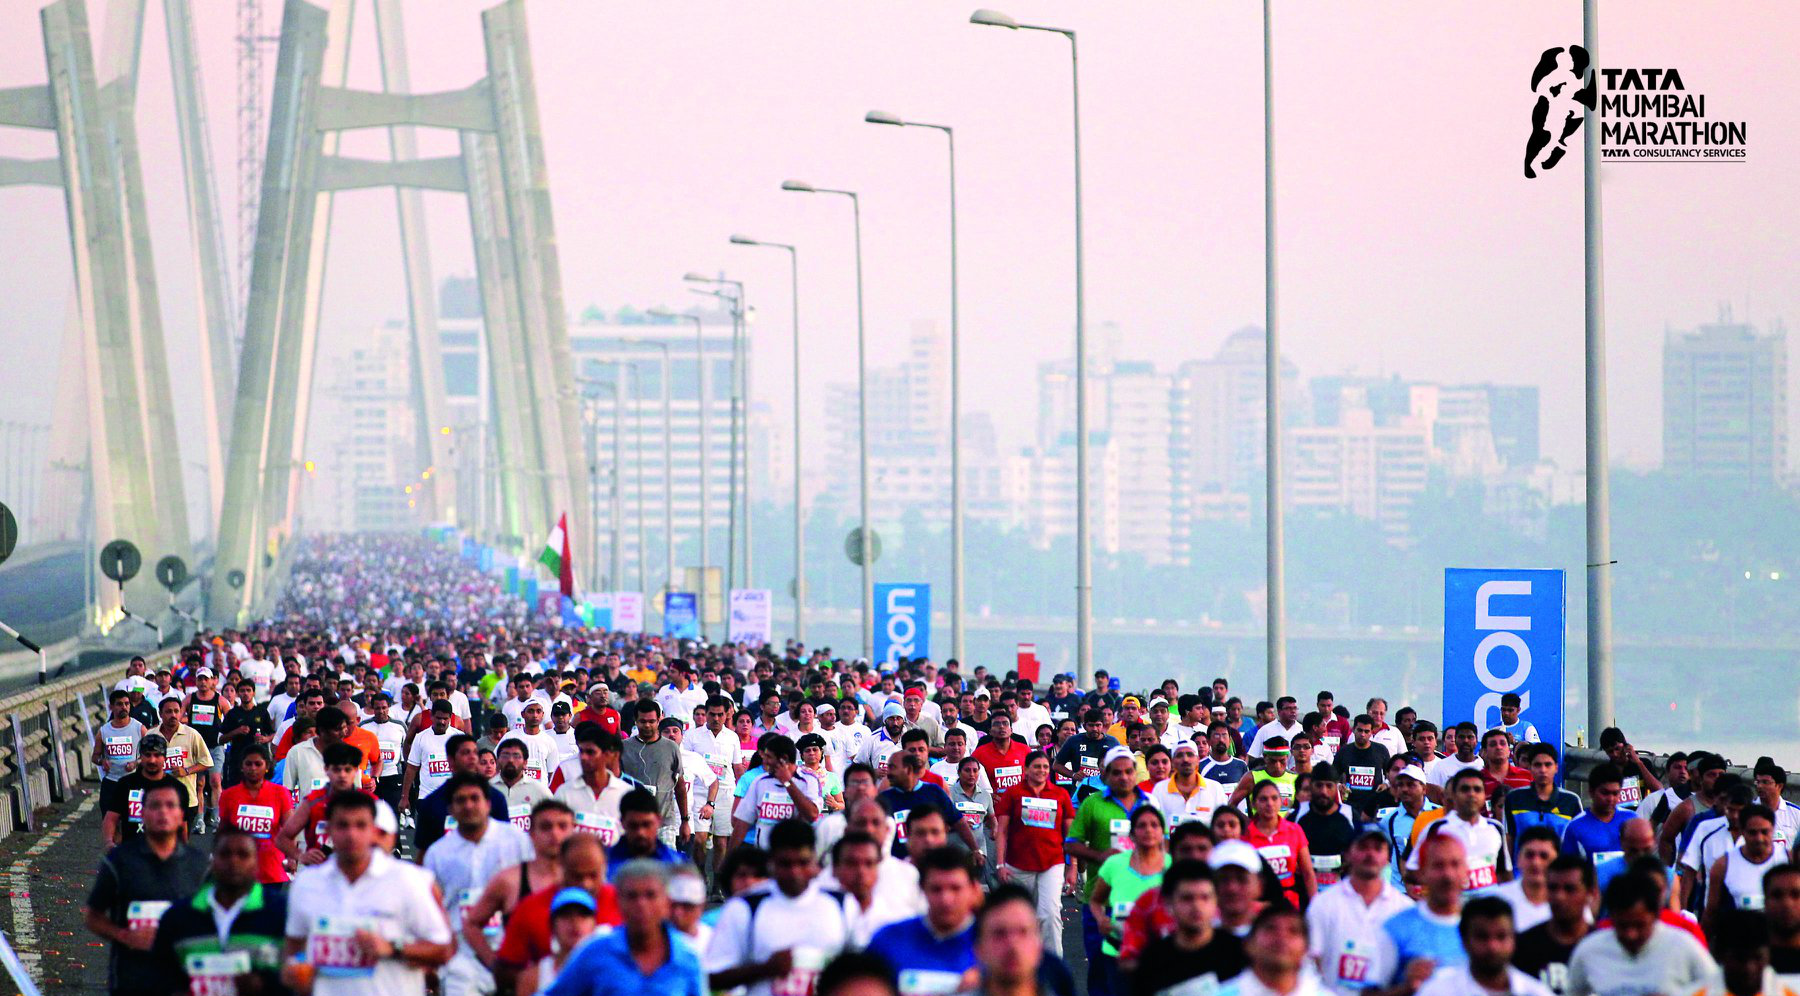 Marathon event near a sea view hotel on Marine Drive, Mumbai, where participants embrace the scenic route and coastal breeze